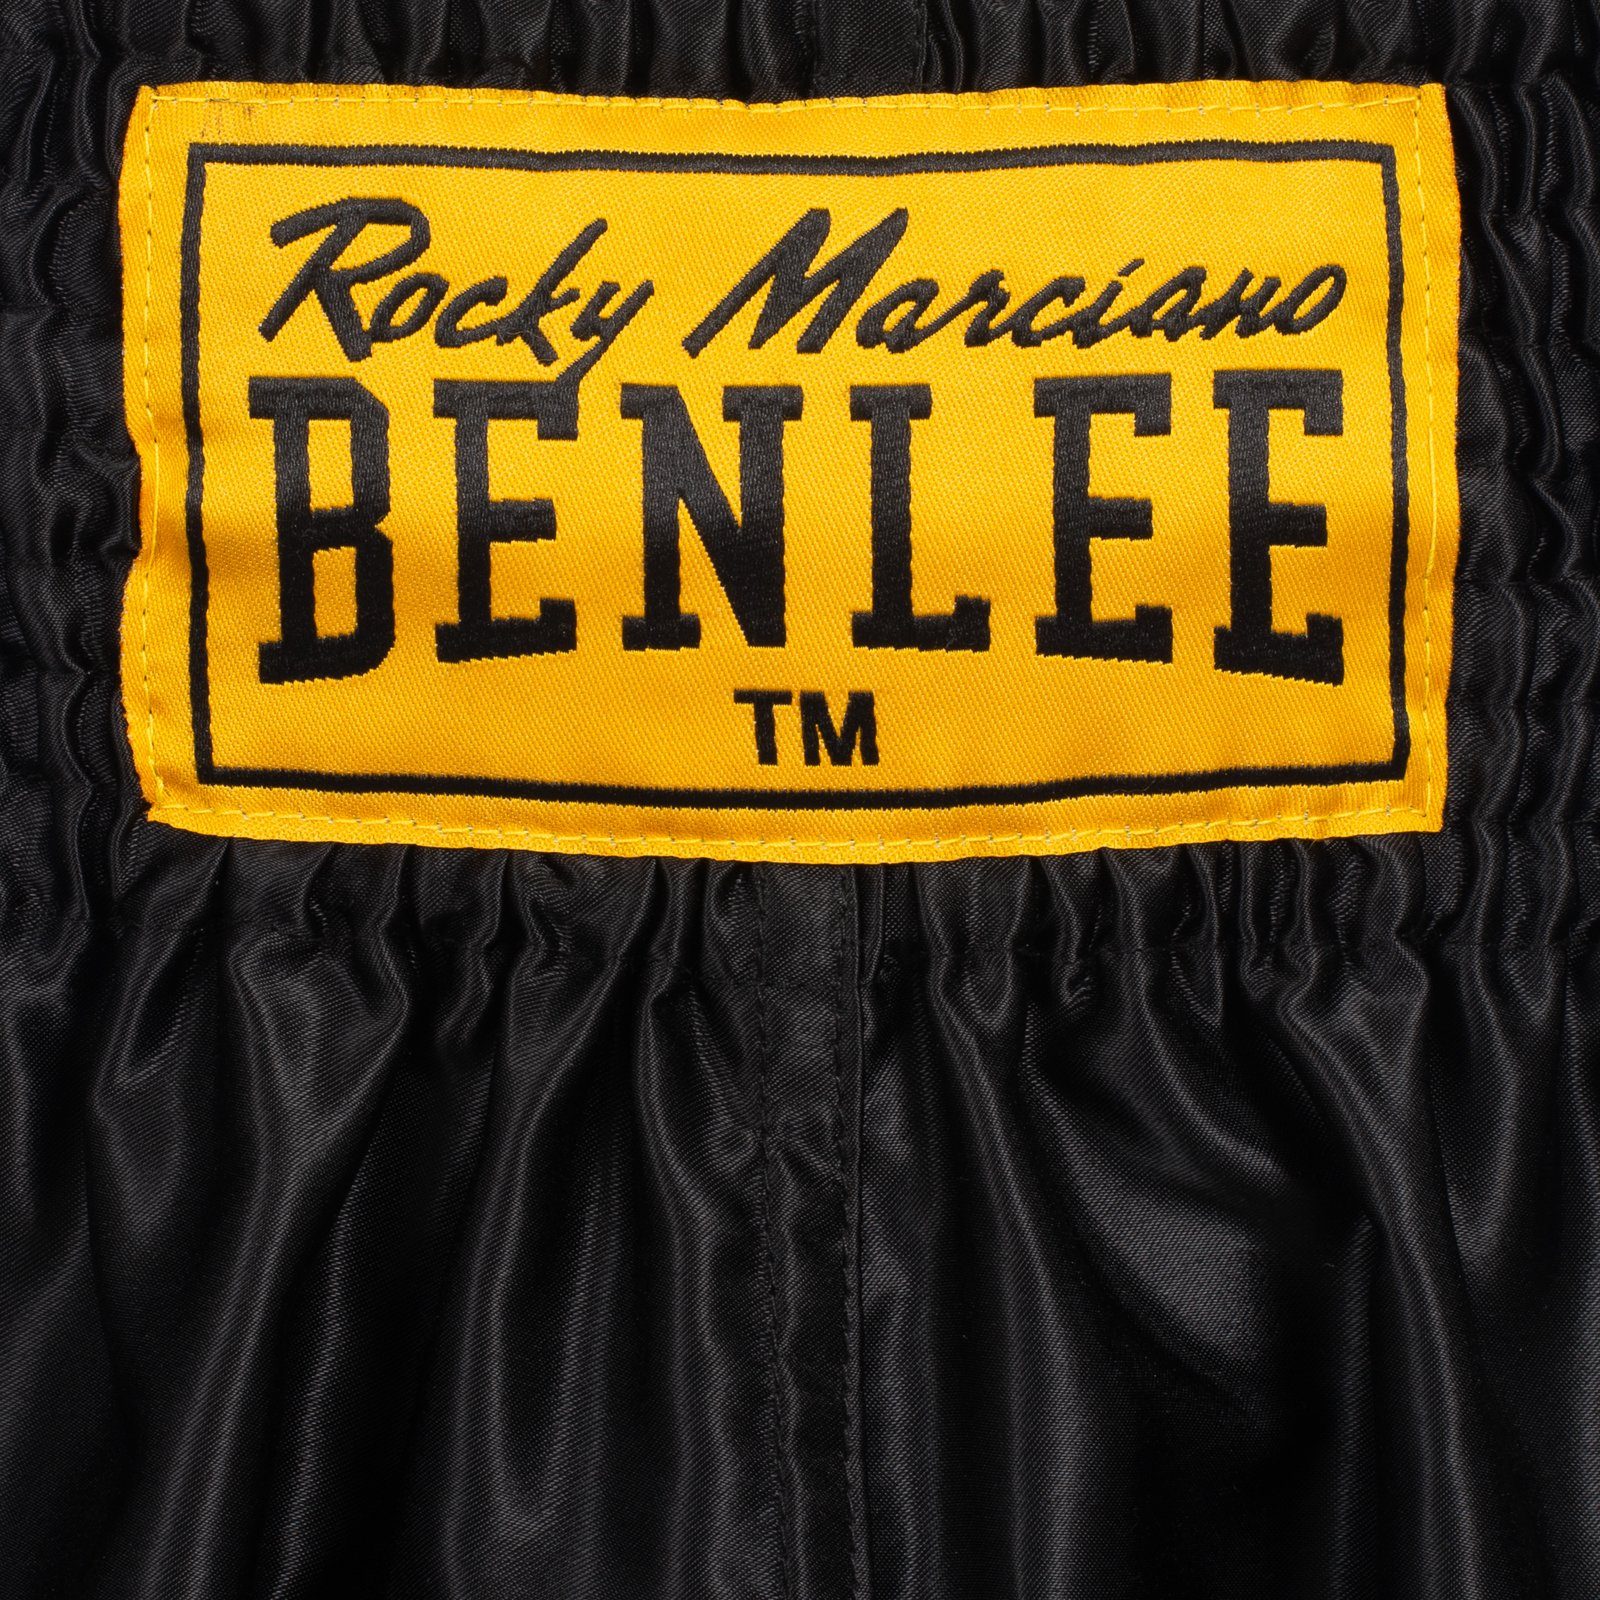 BROCKWAY Trainingshose Benlee Rocky Marciano